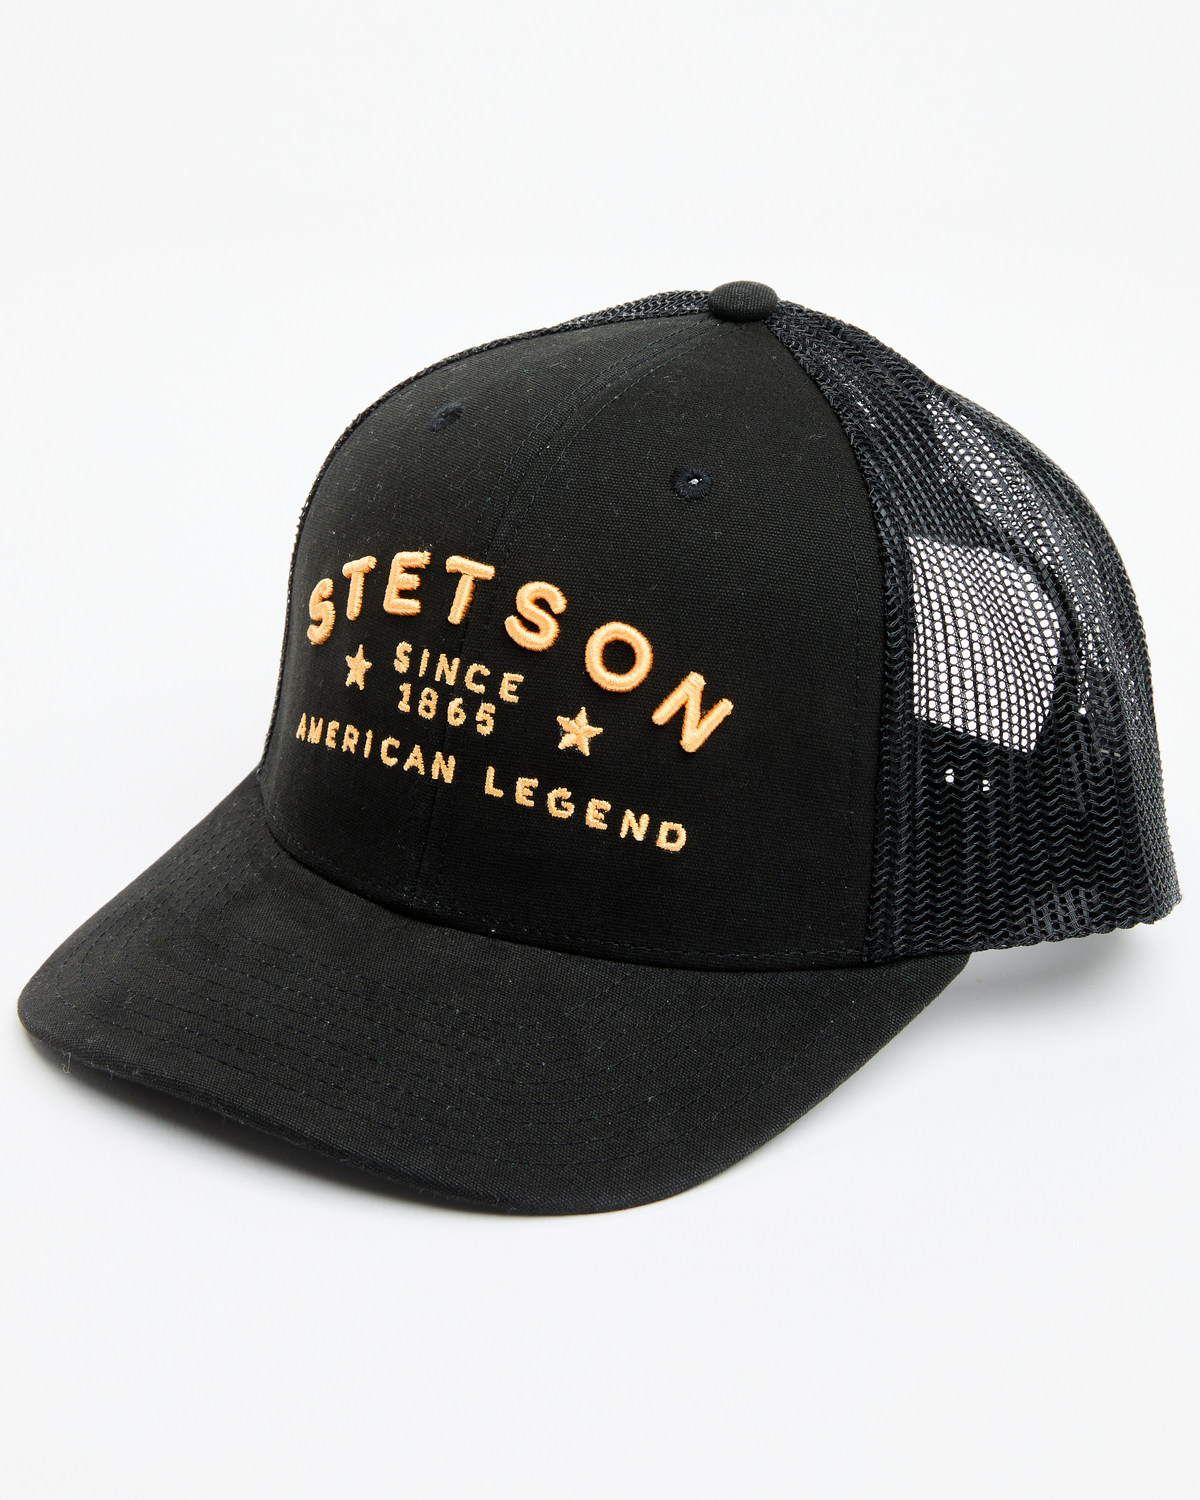 Stetson Men's Embroidered Trucker Cap